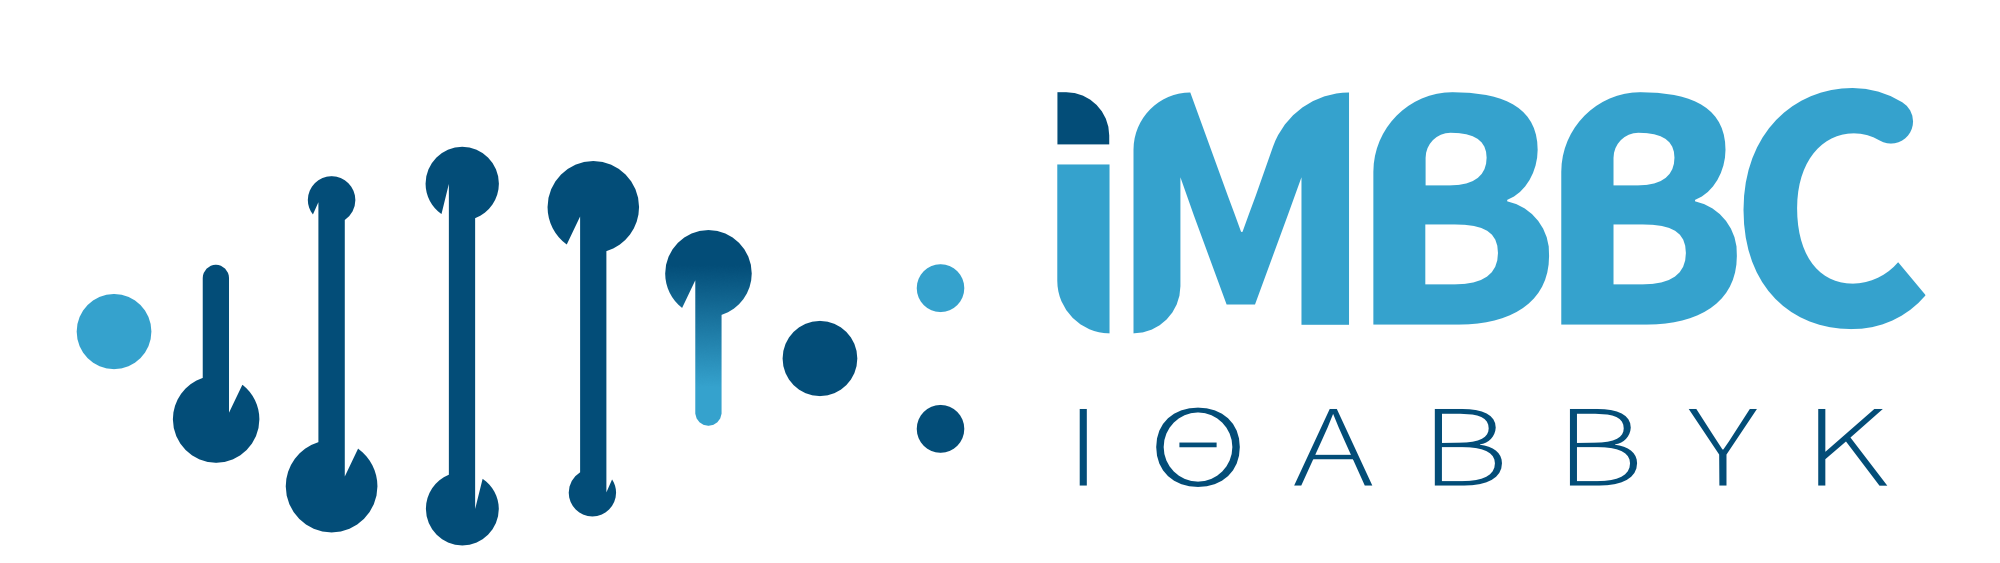 IMBBC logo